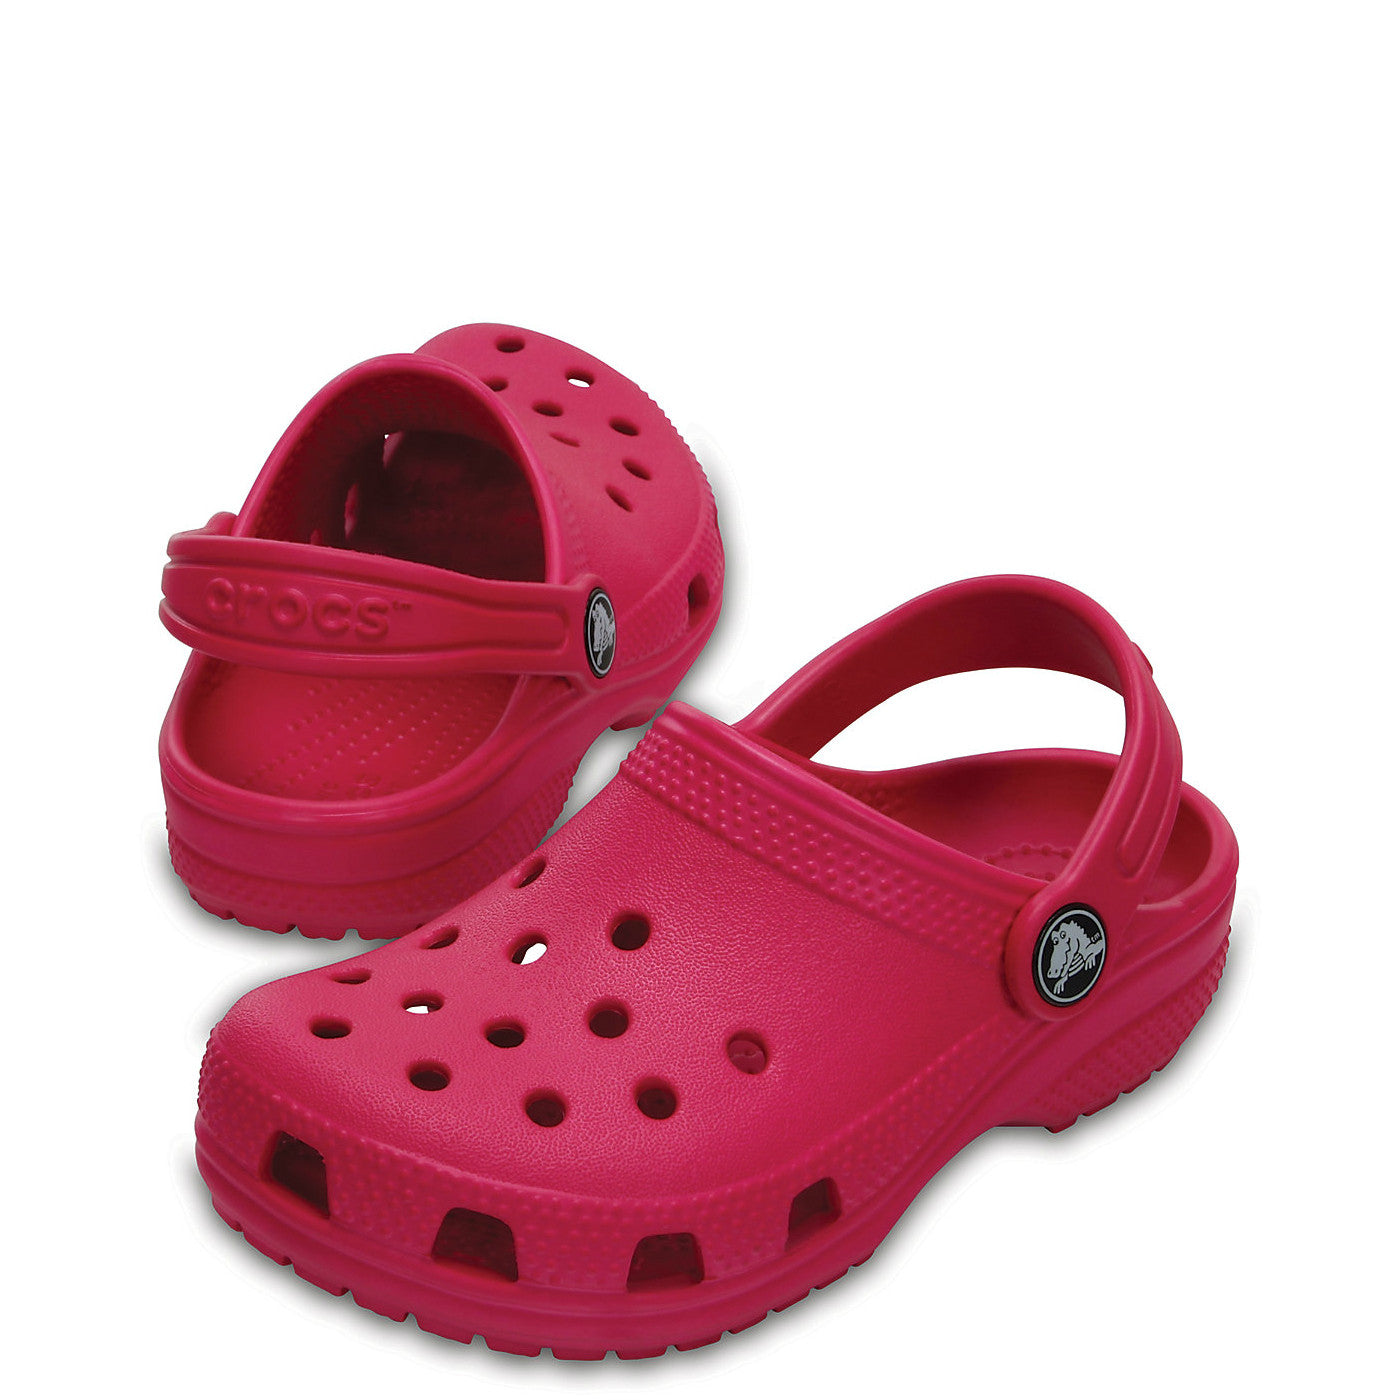 Crocs Kid's Classic Clog - Candy Pink 